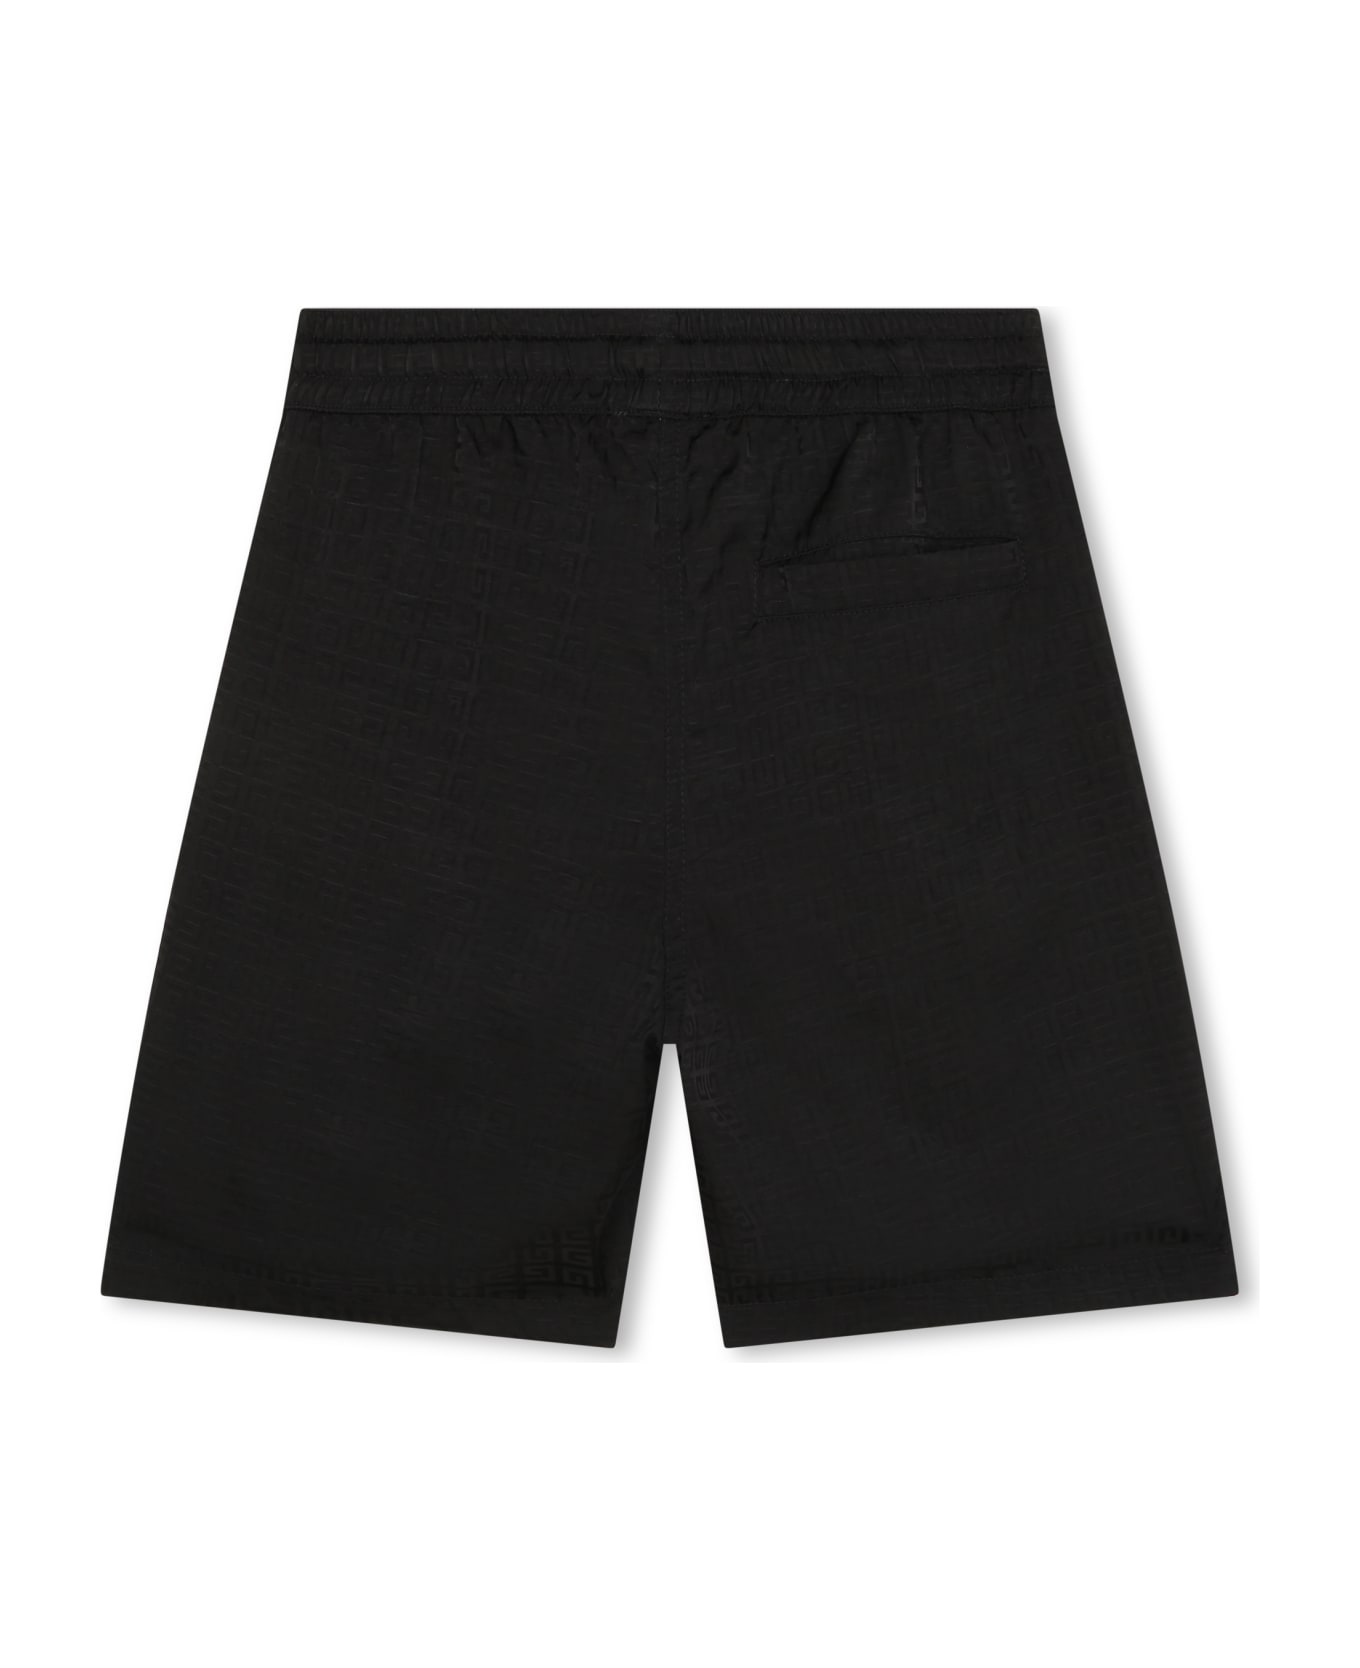 Givenchy Sports Shorts With Monogram - Black